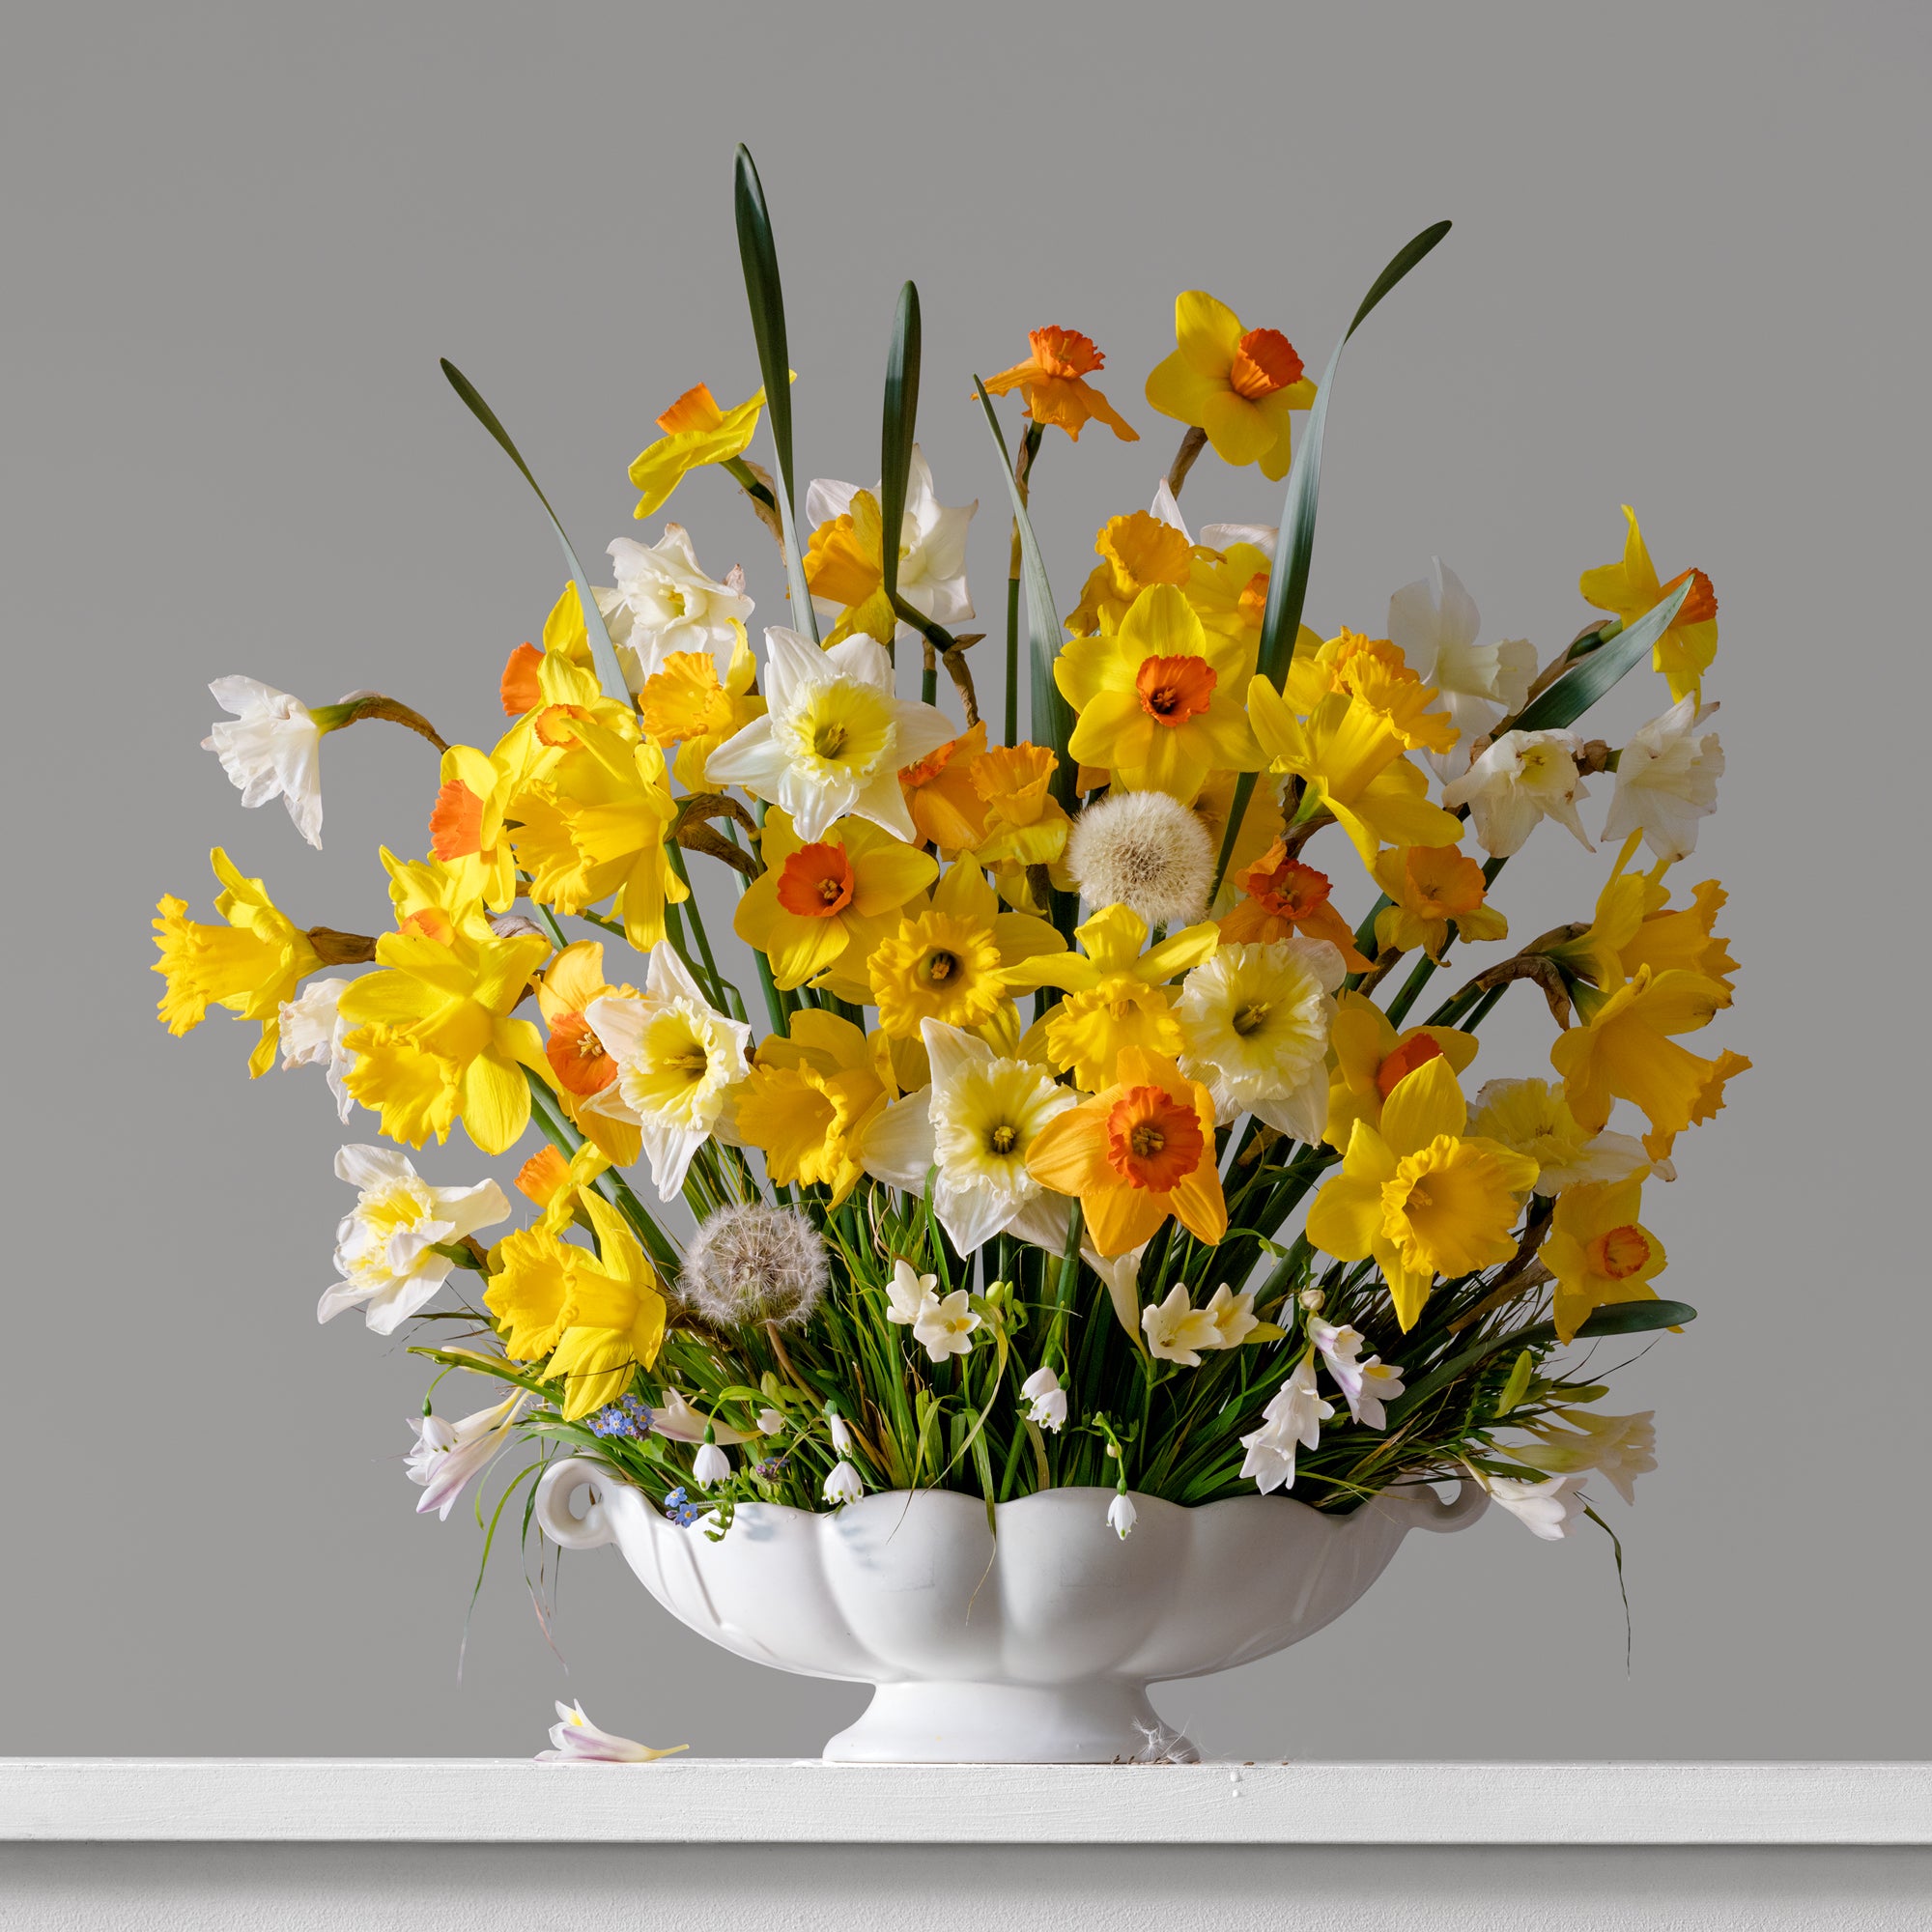 Daffodils, Freesias & Dandelions 2.39pm